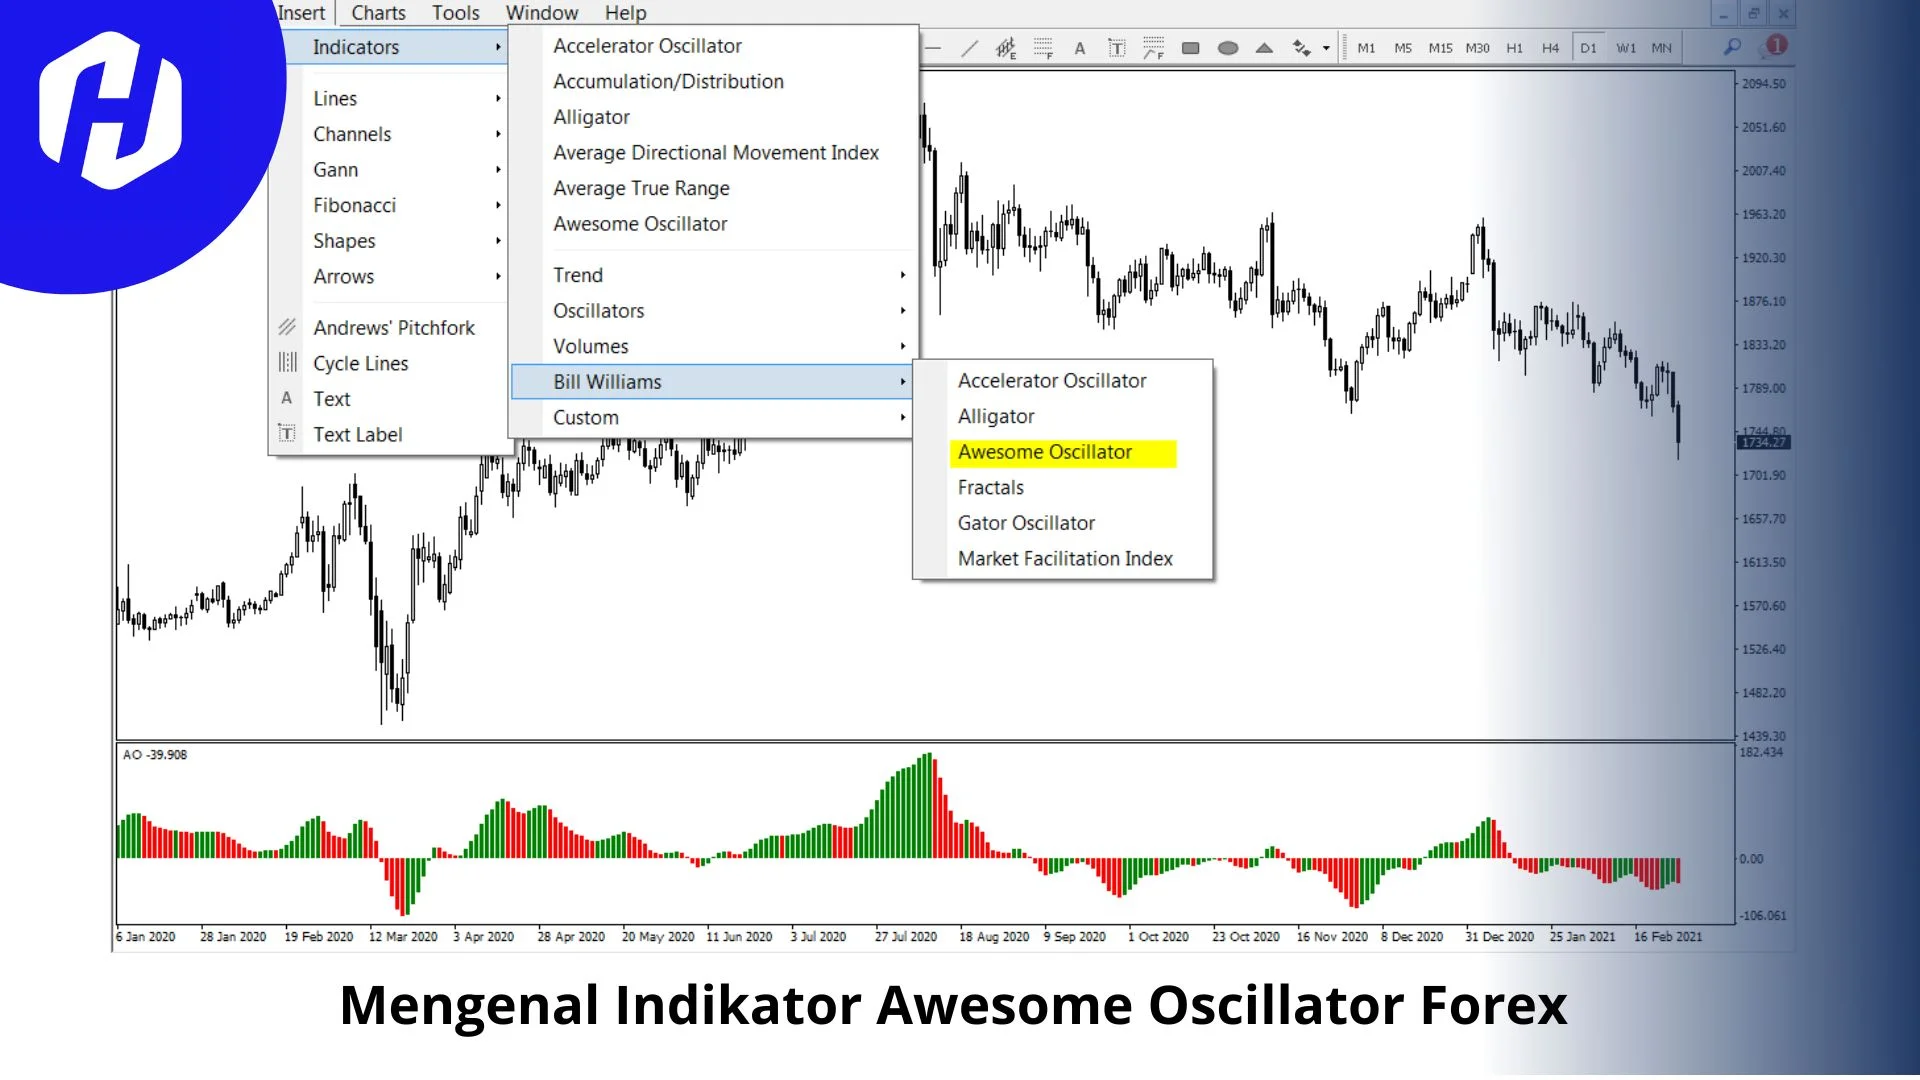 Mengenal Indikator Awesome Oscillator Forex